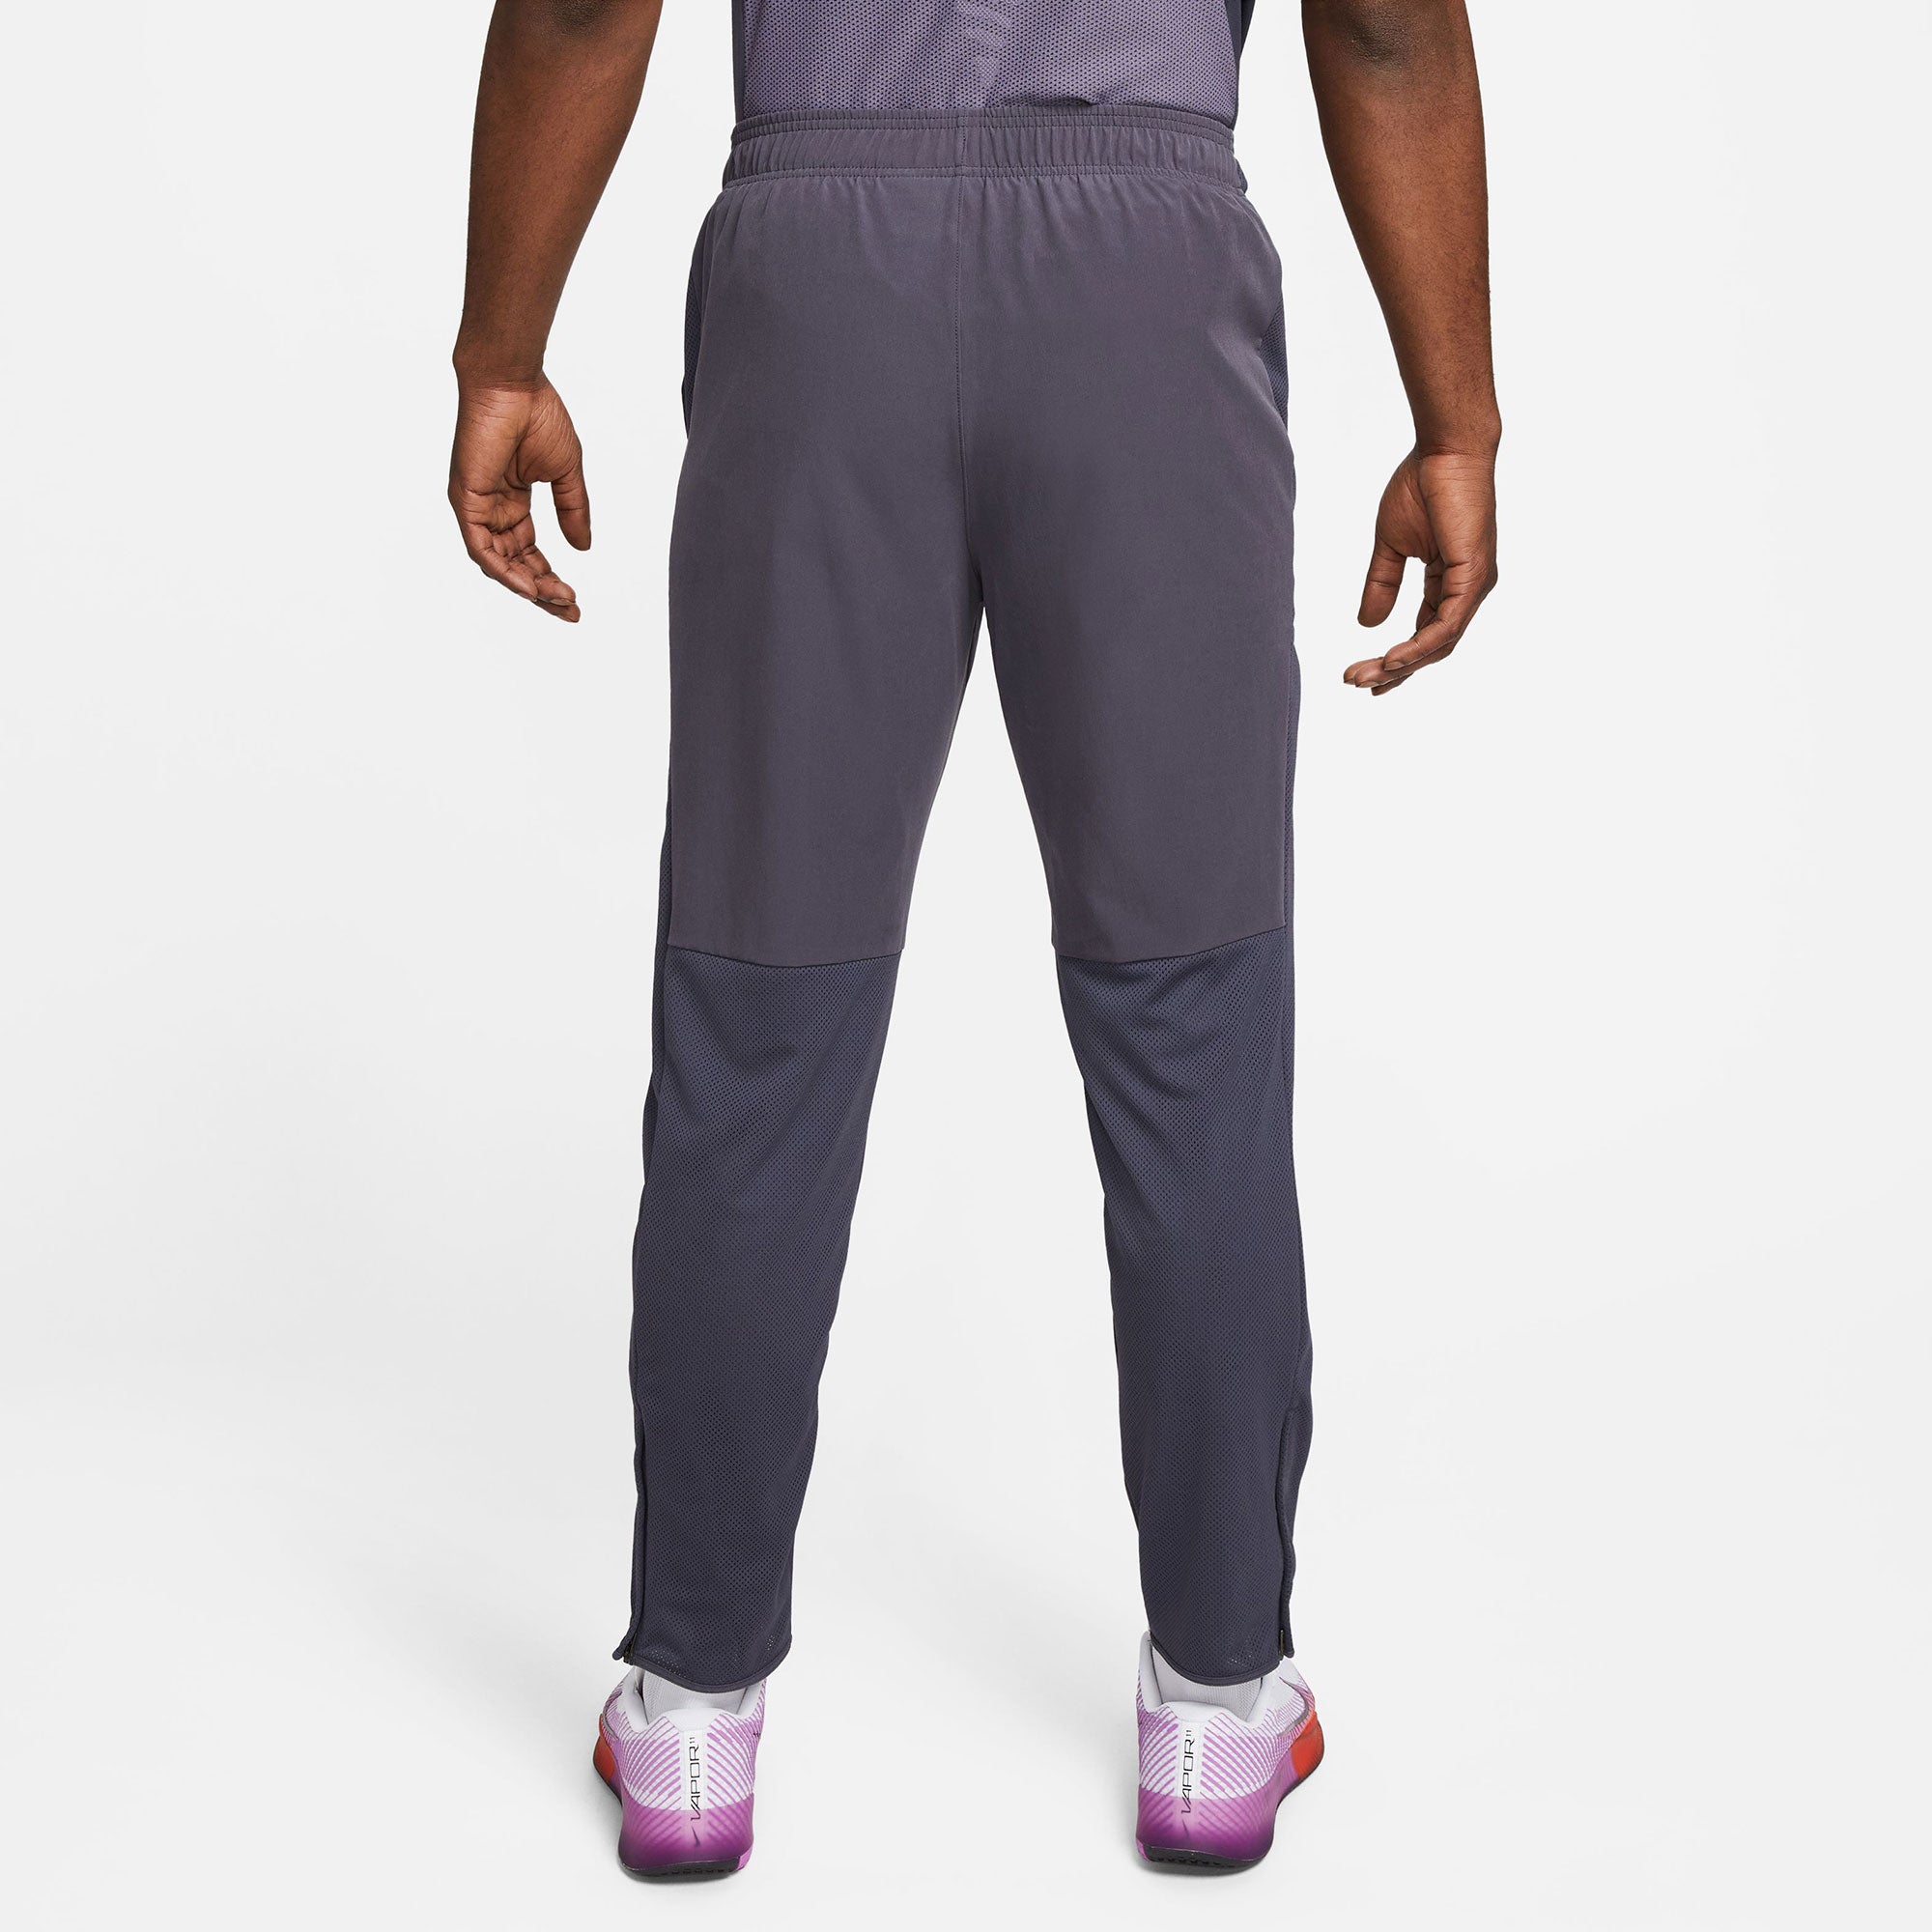 NikeCourt Advantage Men's Tennis Pants - Grey